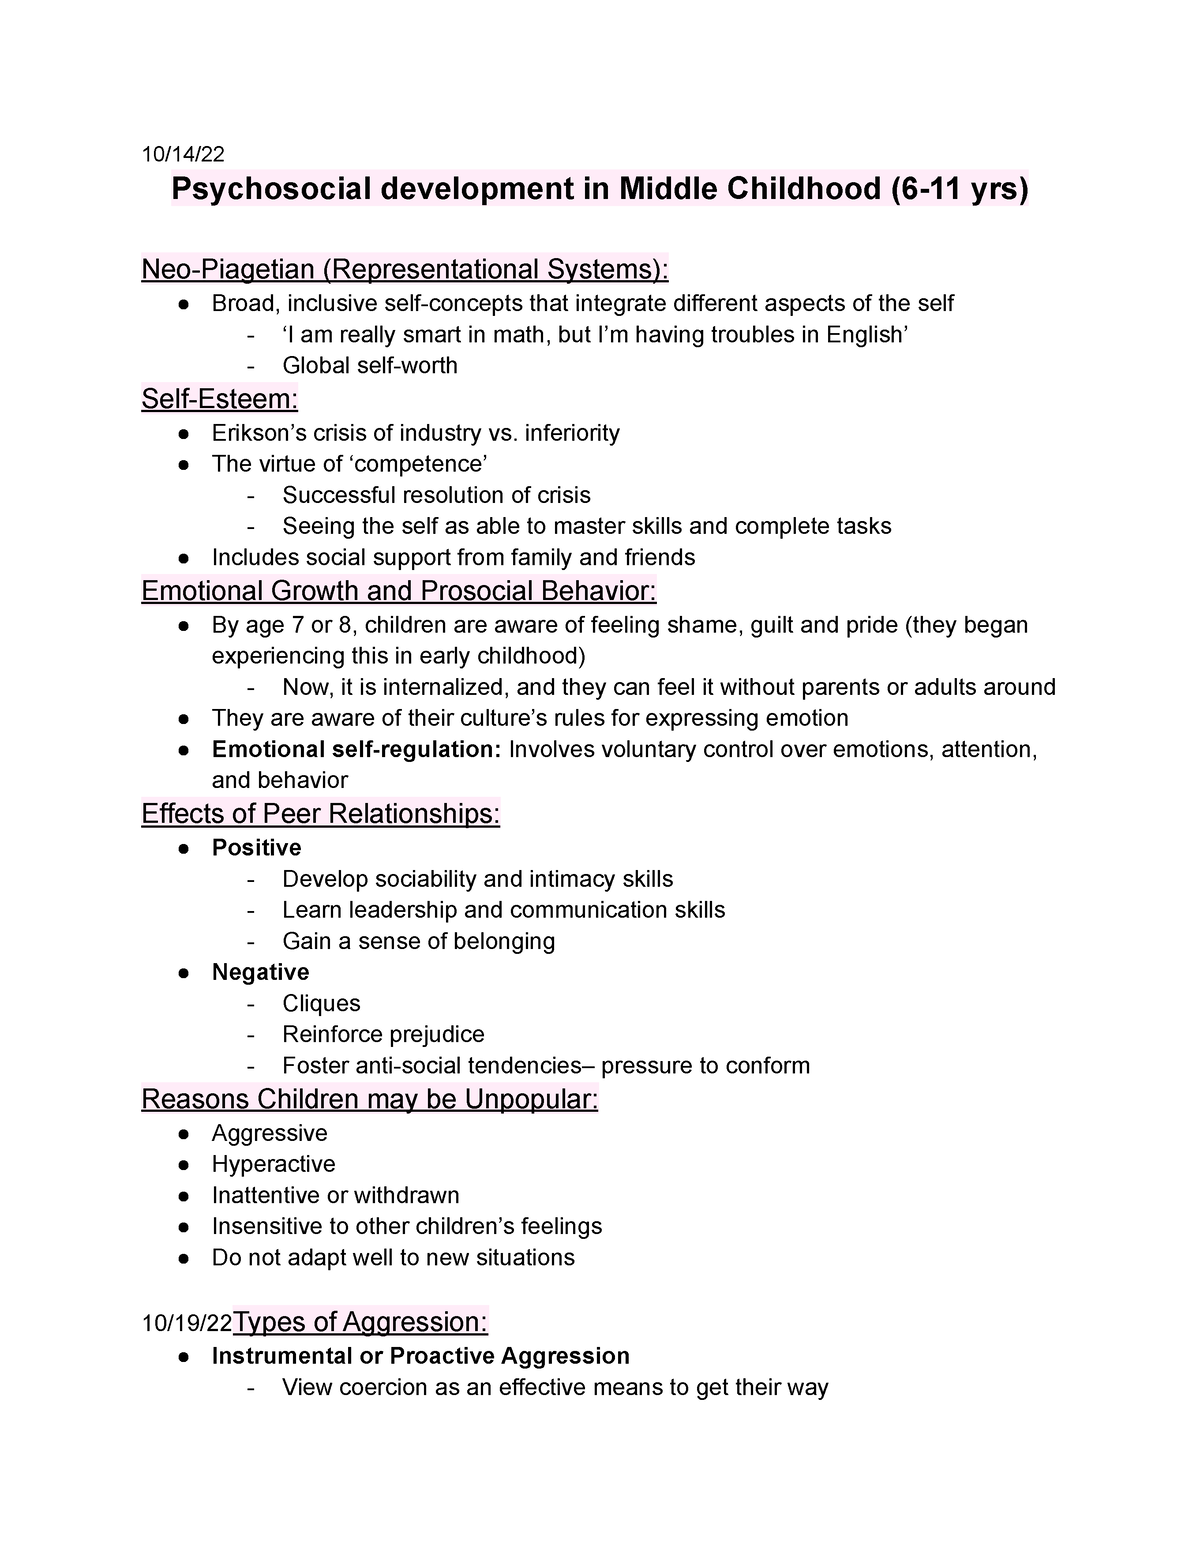 PSYC 203 Chapter 10 - Dr. Shifren - 10/14/ Psychosocial development in ...